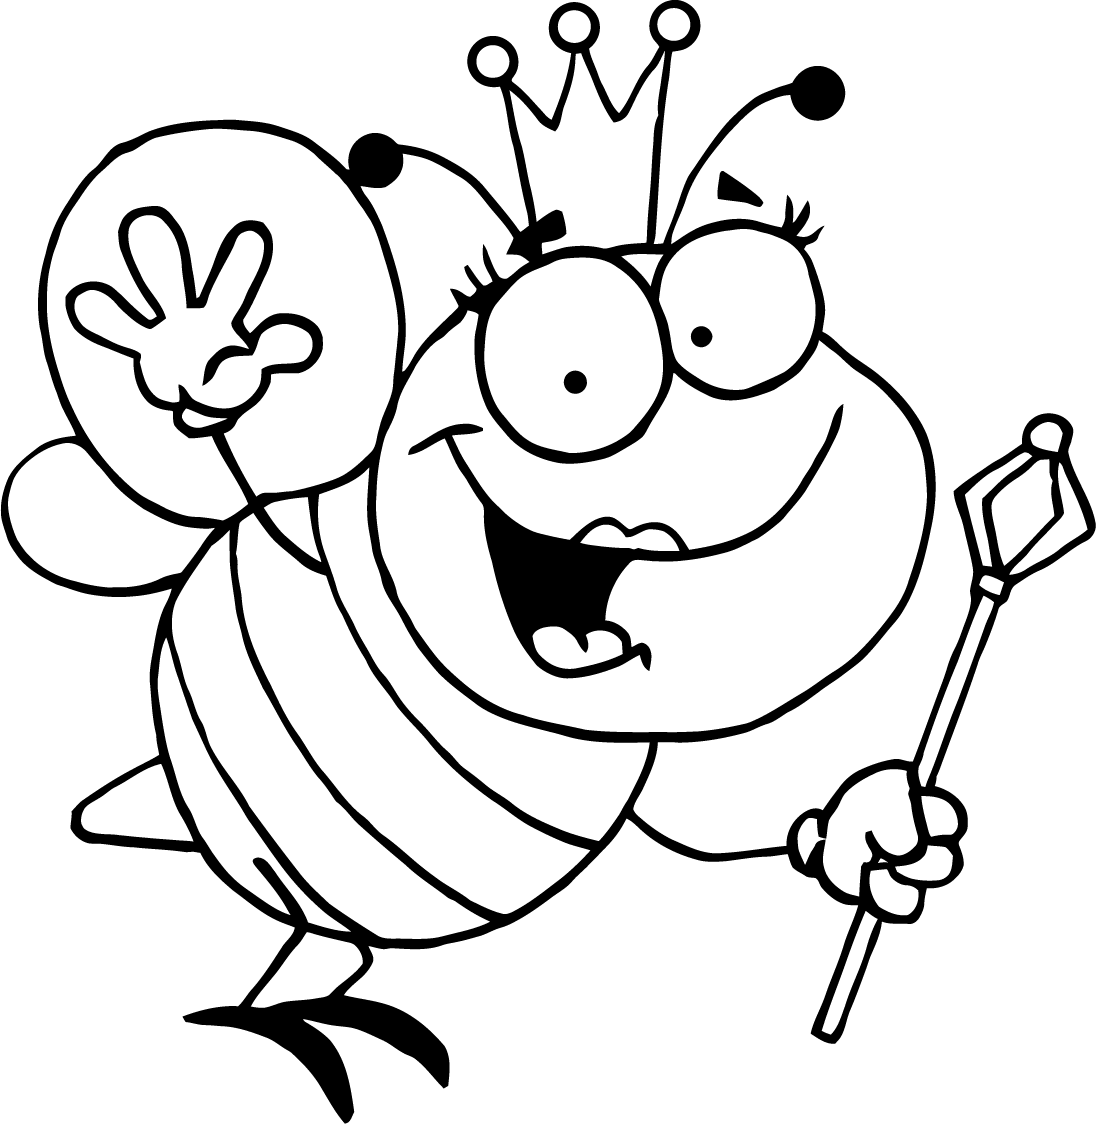 B is for bee. Queen Bee coloring page for kids | ColoringGuru